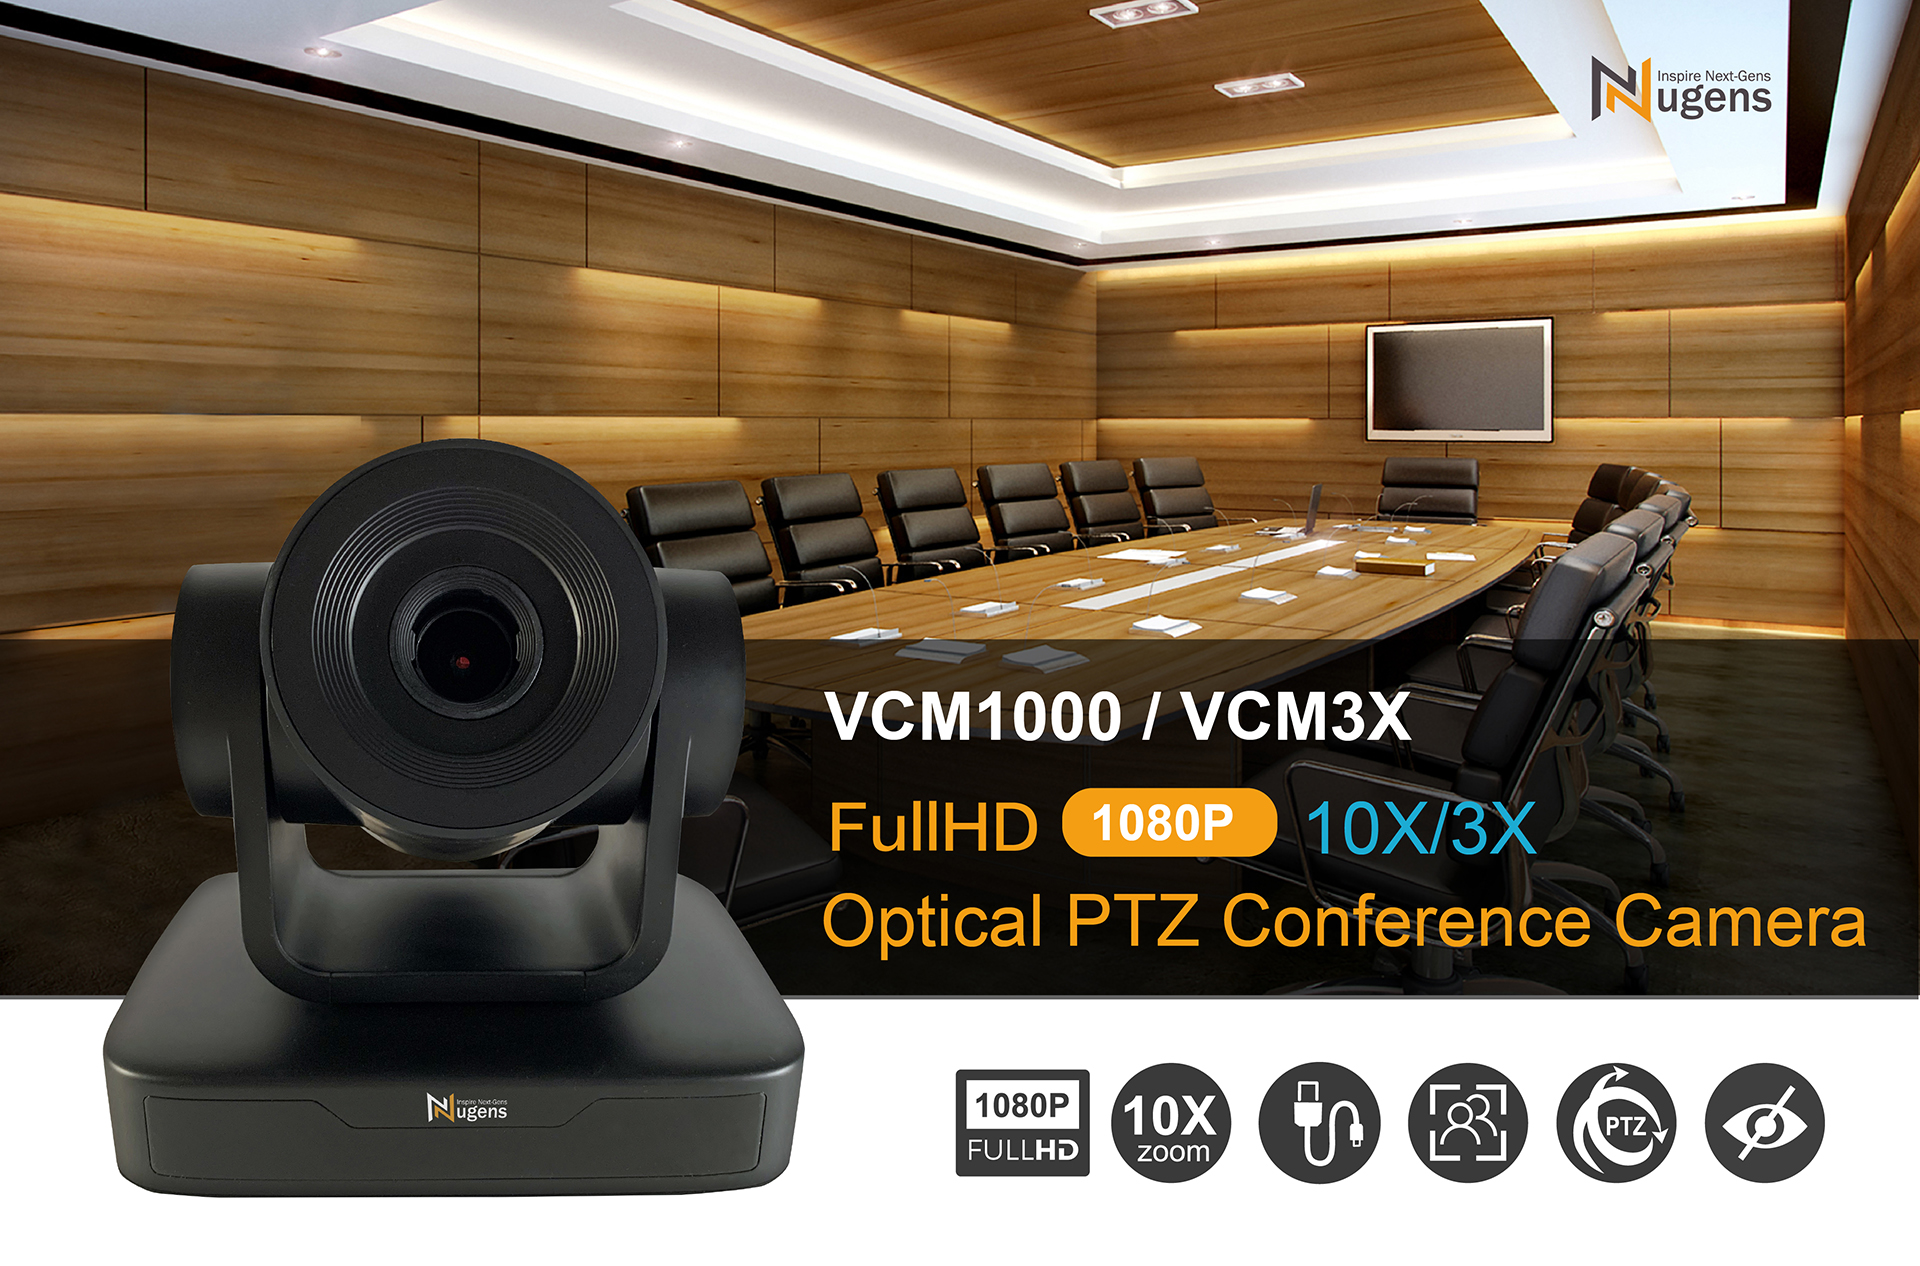 VCM1000 10X Optical PTZ Conference Camera